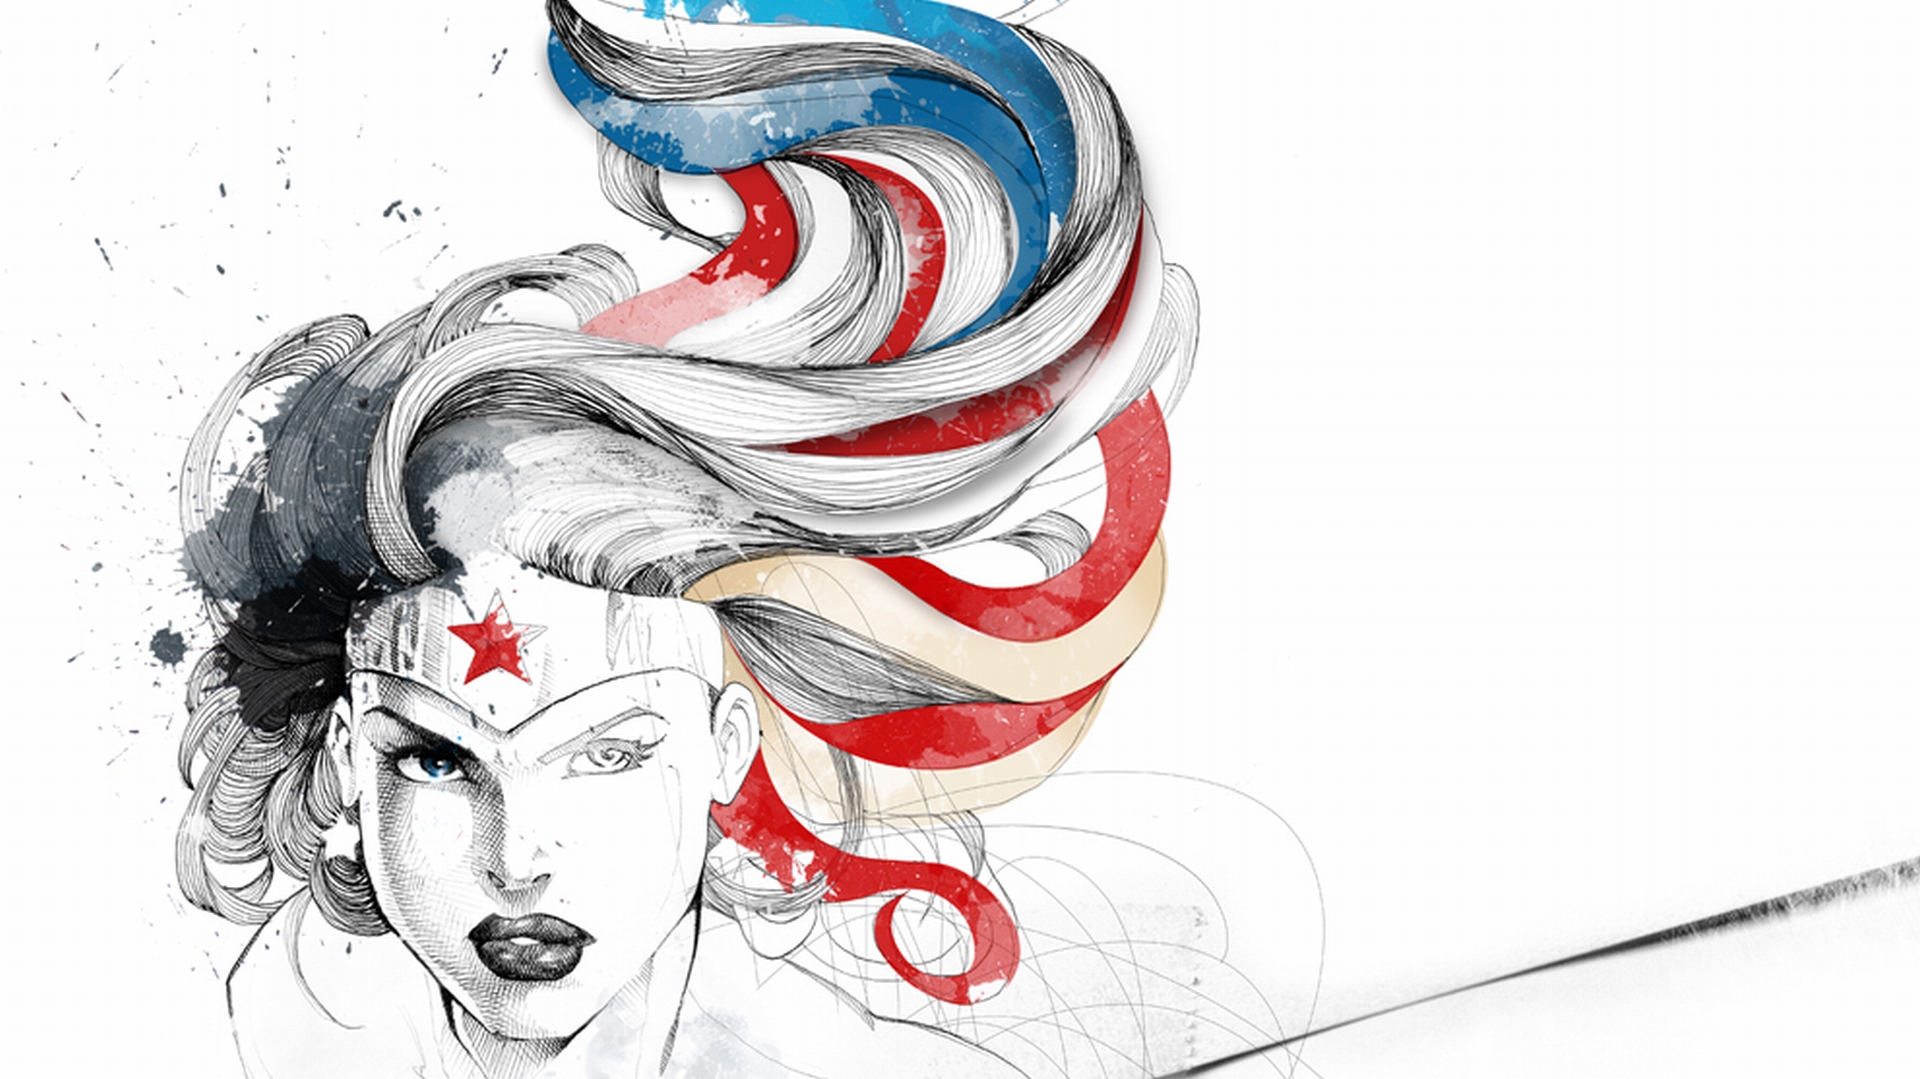 Comics-inspired wonder woman desktop wallpaper.